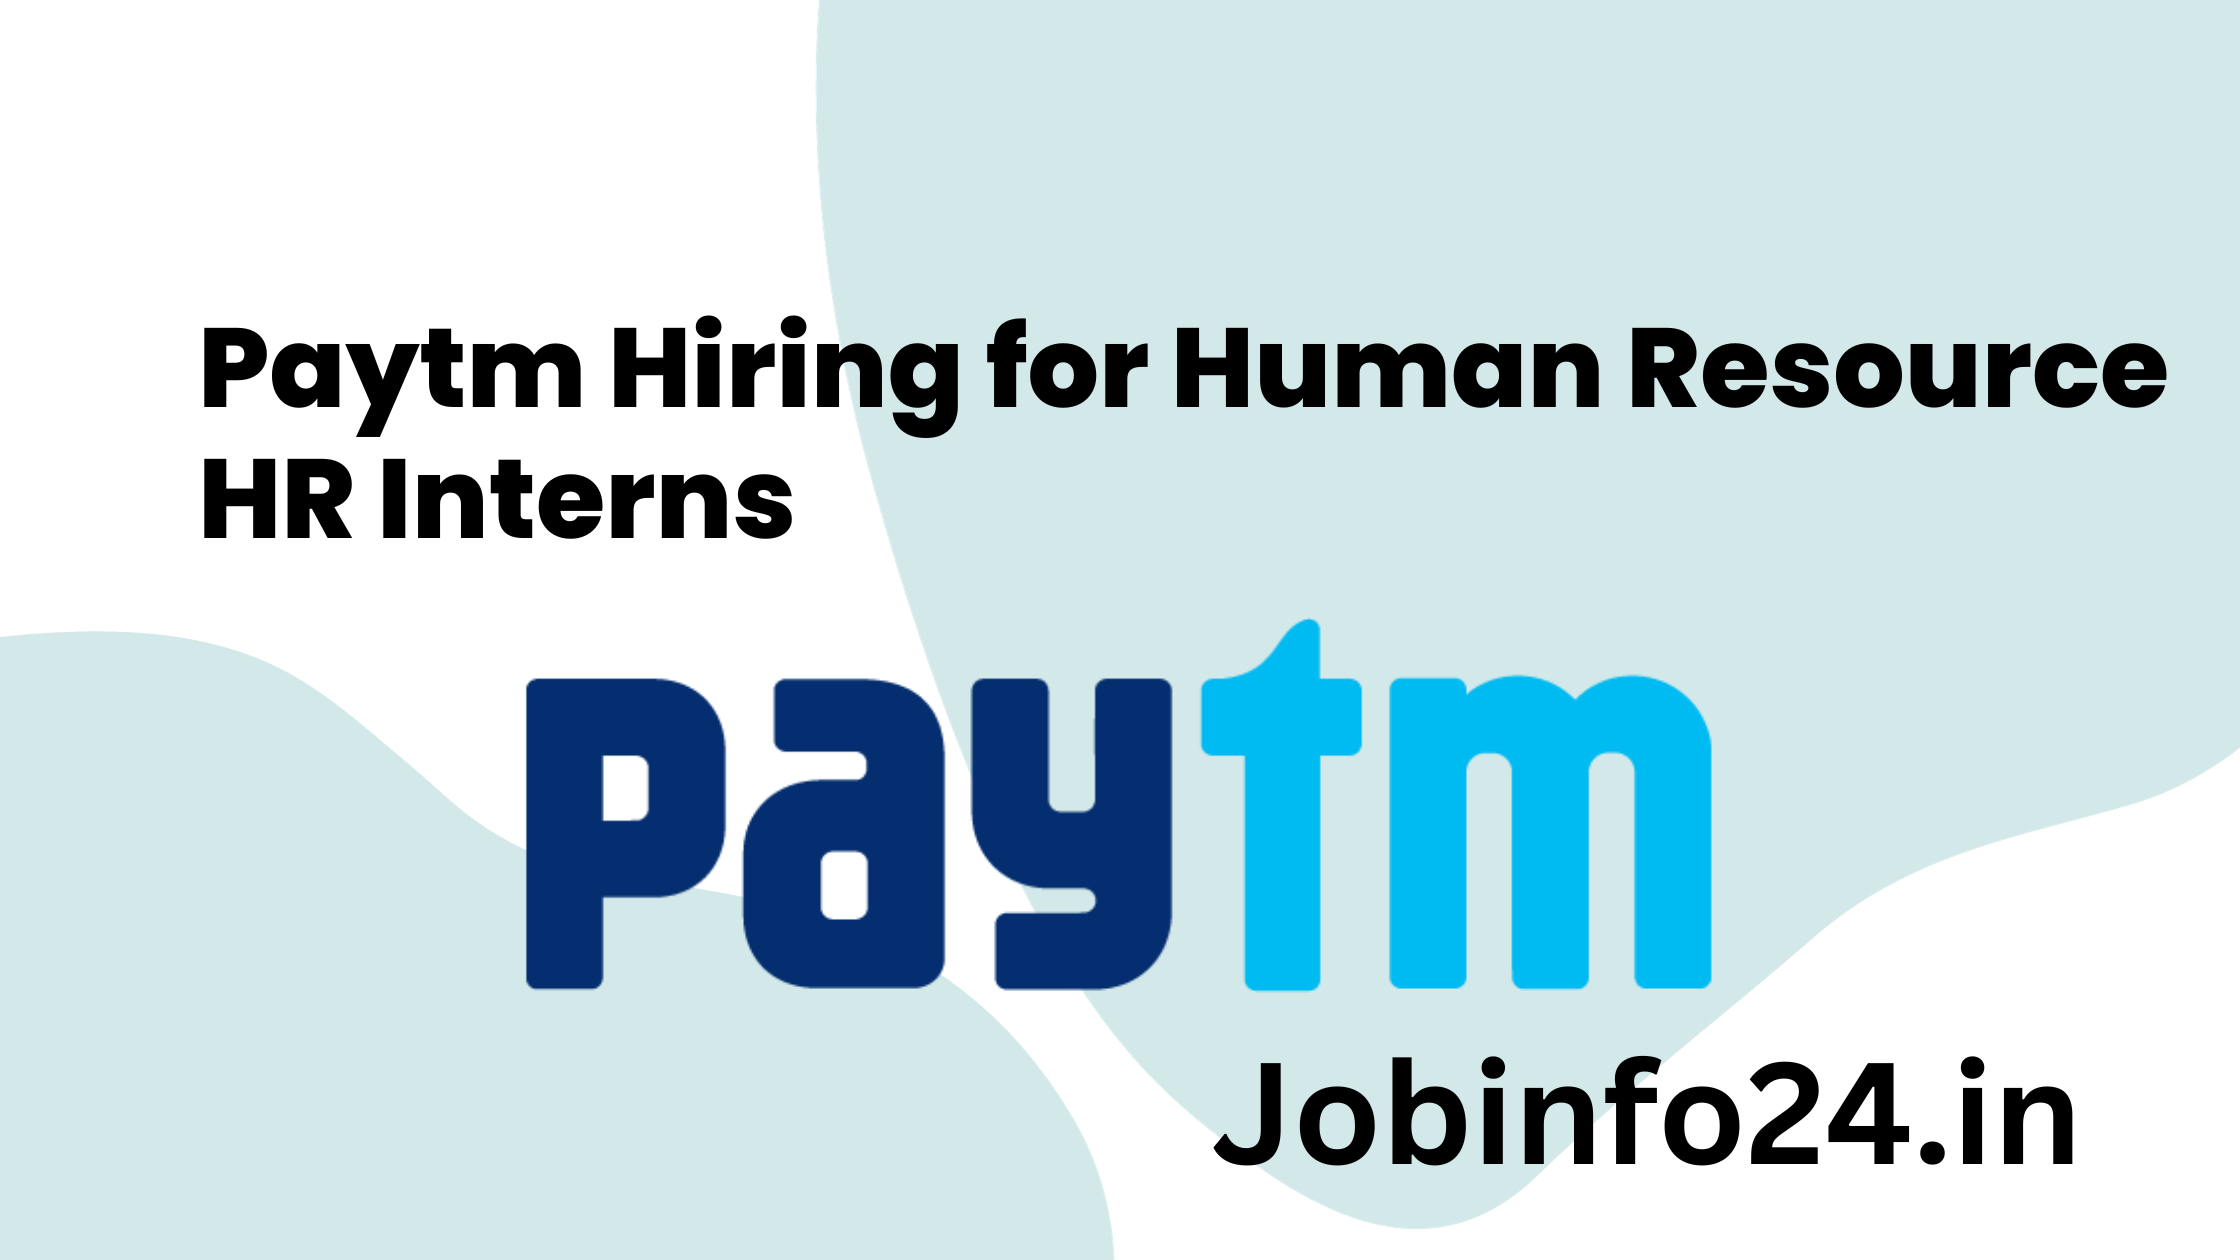 Paytm Hiring for Human Resource HR Interns